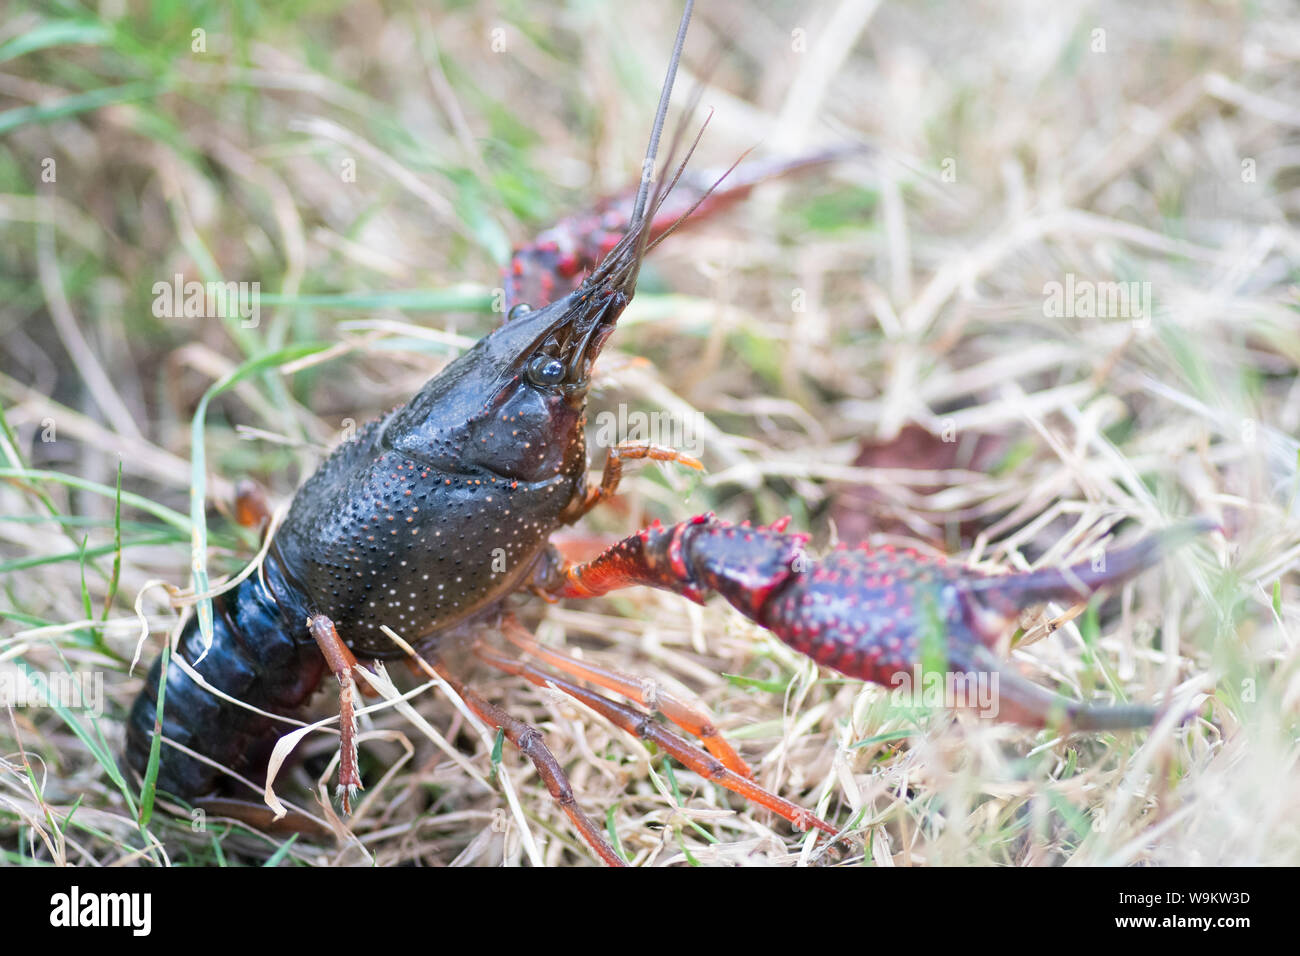 Red Swamp Crayfish, Procambarus clarkii, invasive crayfish in london, Regents Canal, August Stock Photo